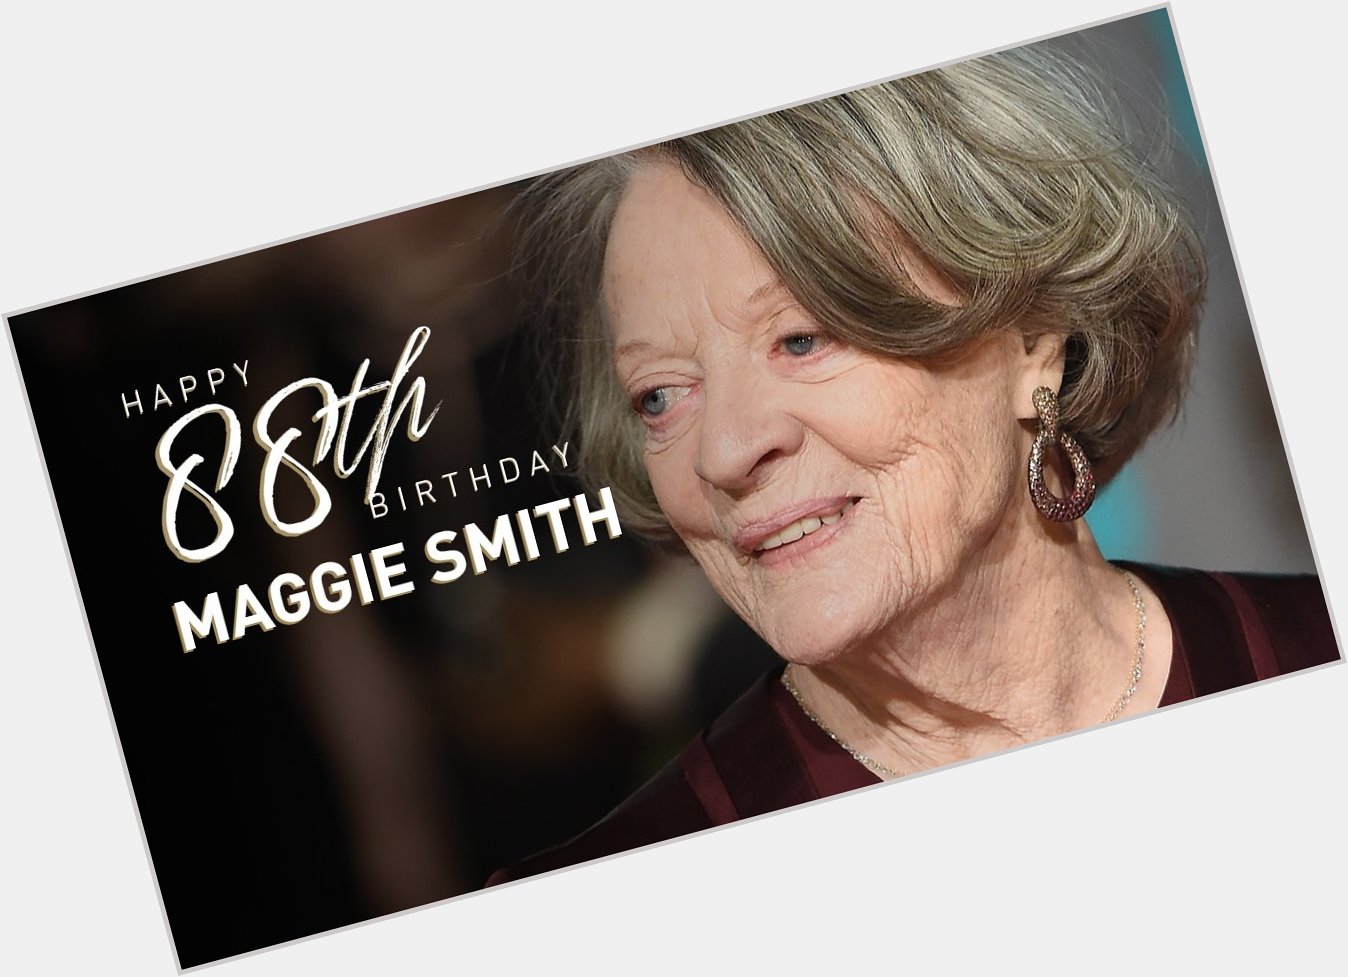 Happy birthday Maggie Smith!

Read her bio here:  